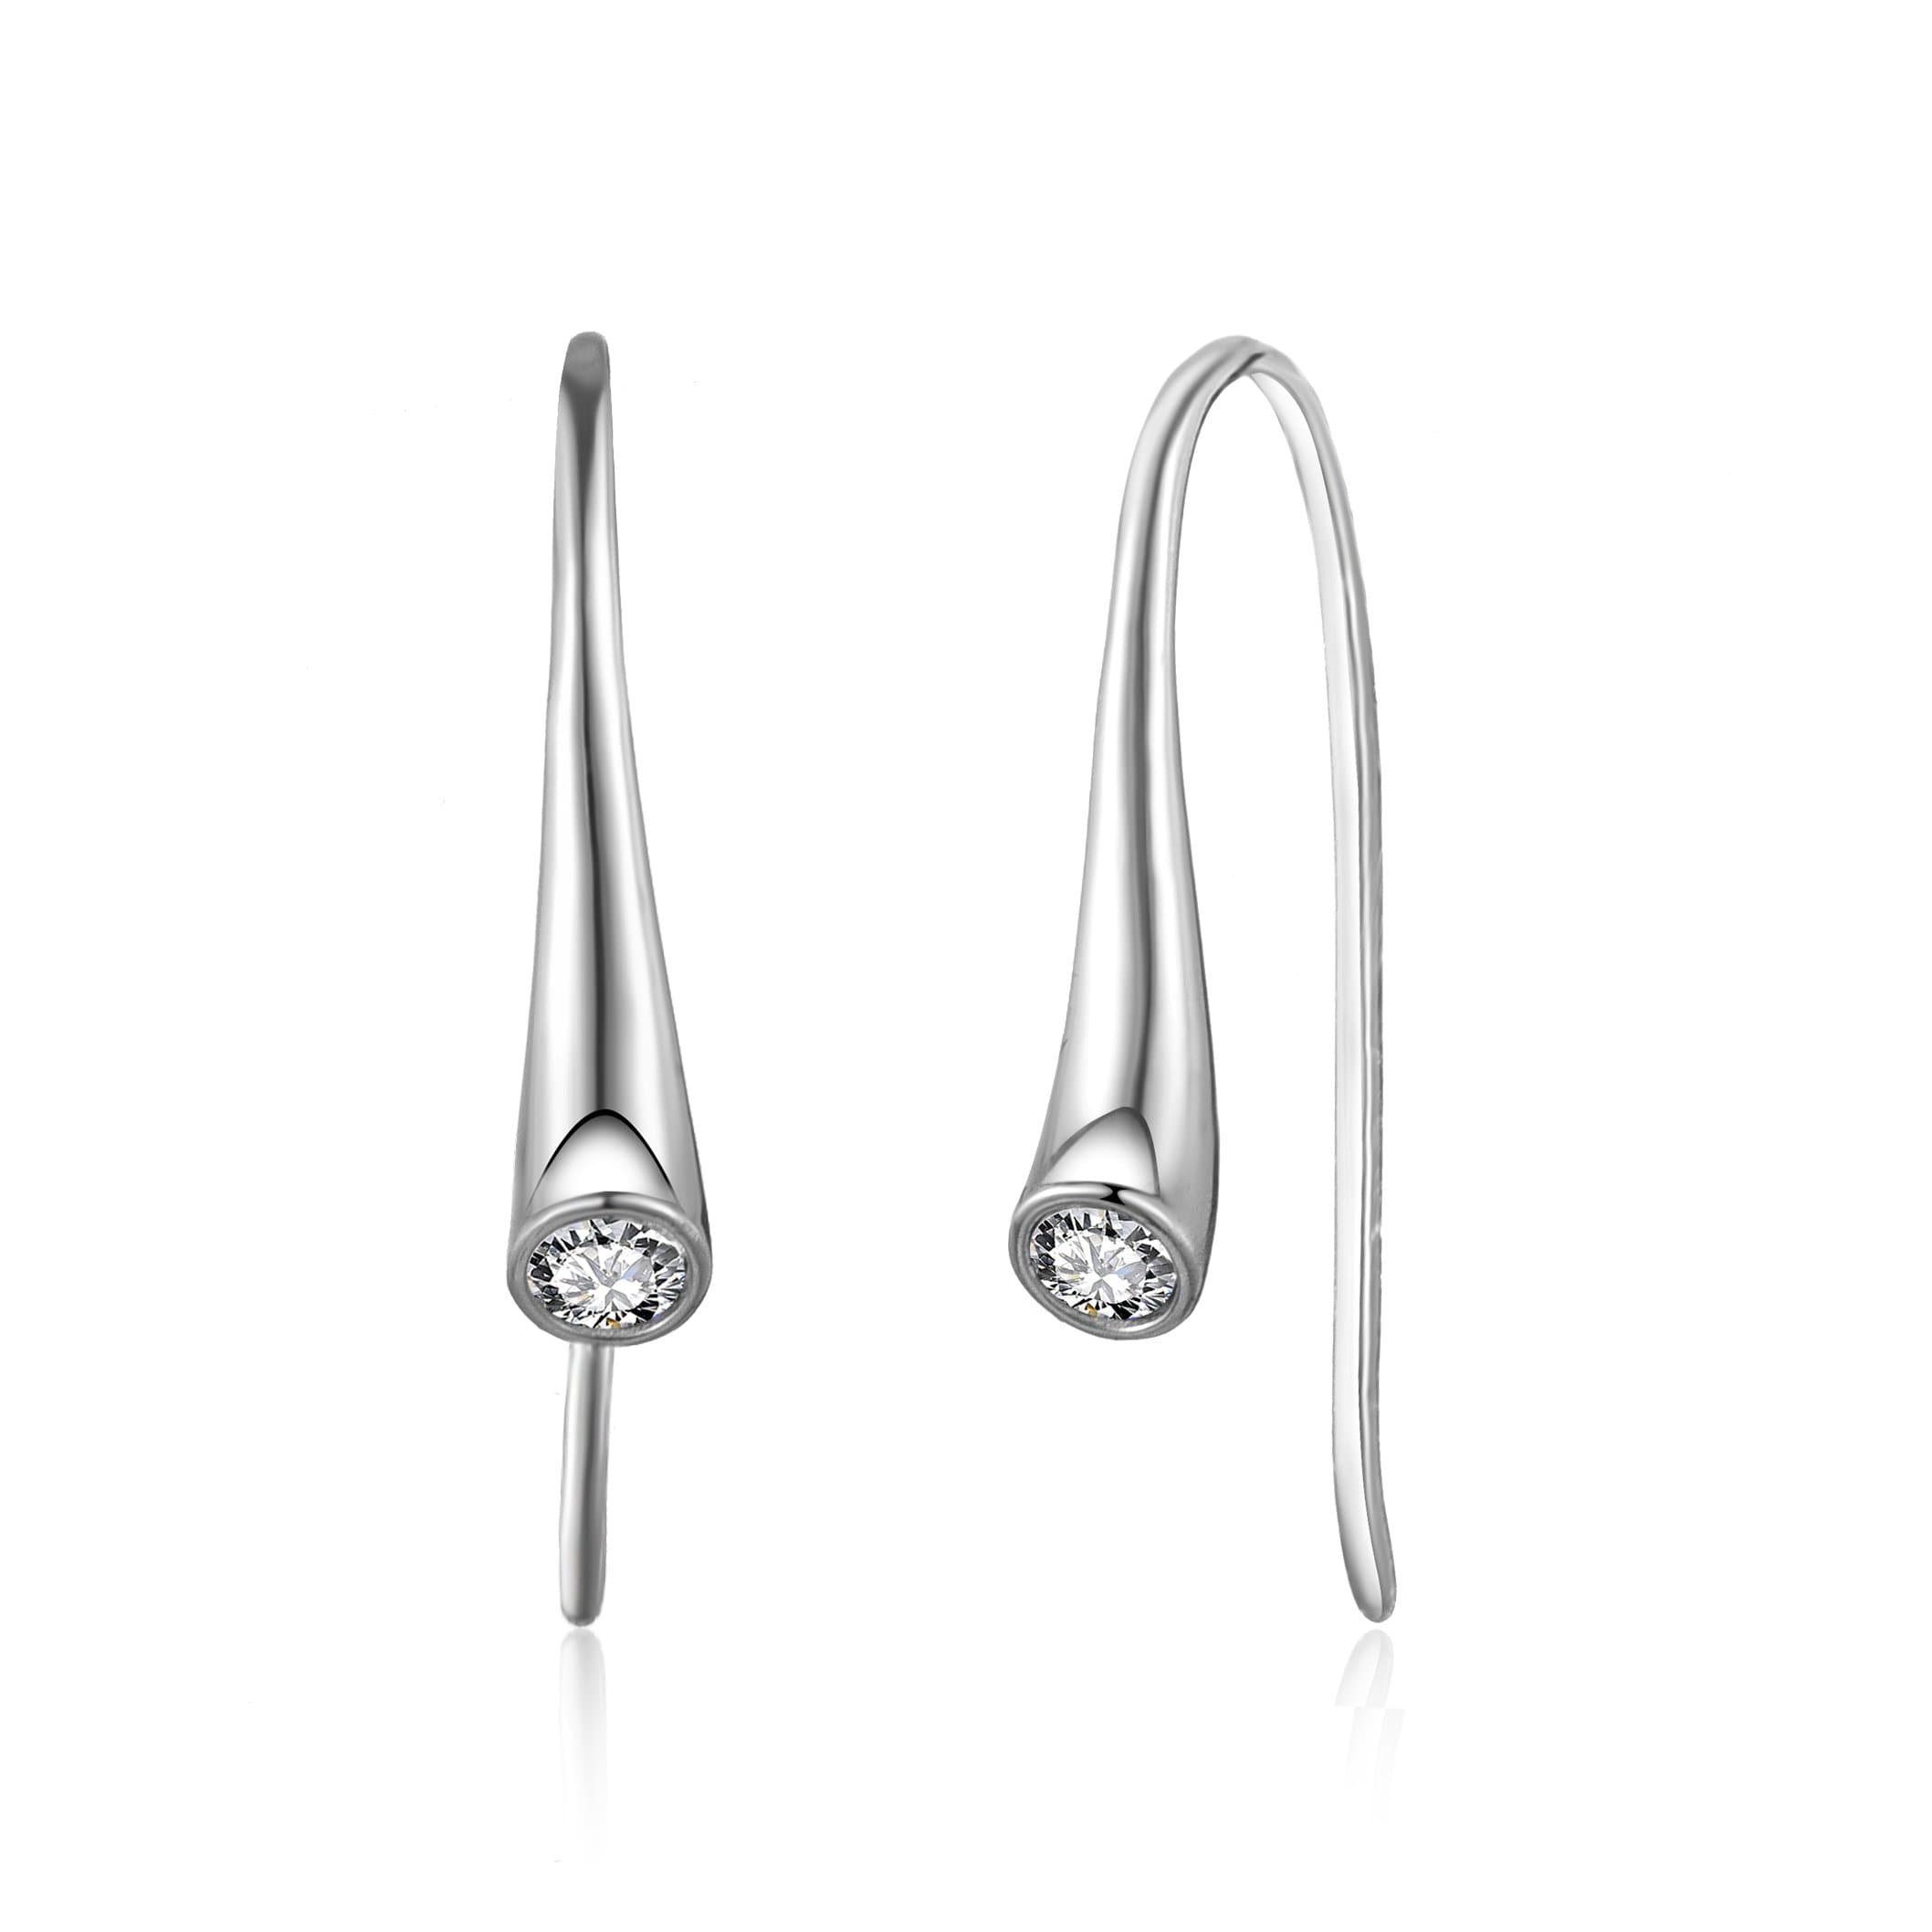 Sterling Silver Teardrop Earrings Created with Zircondia® Crystals by Philip Jones Jewellery